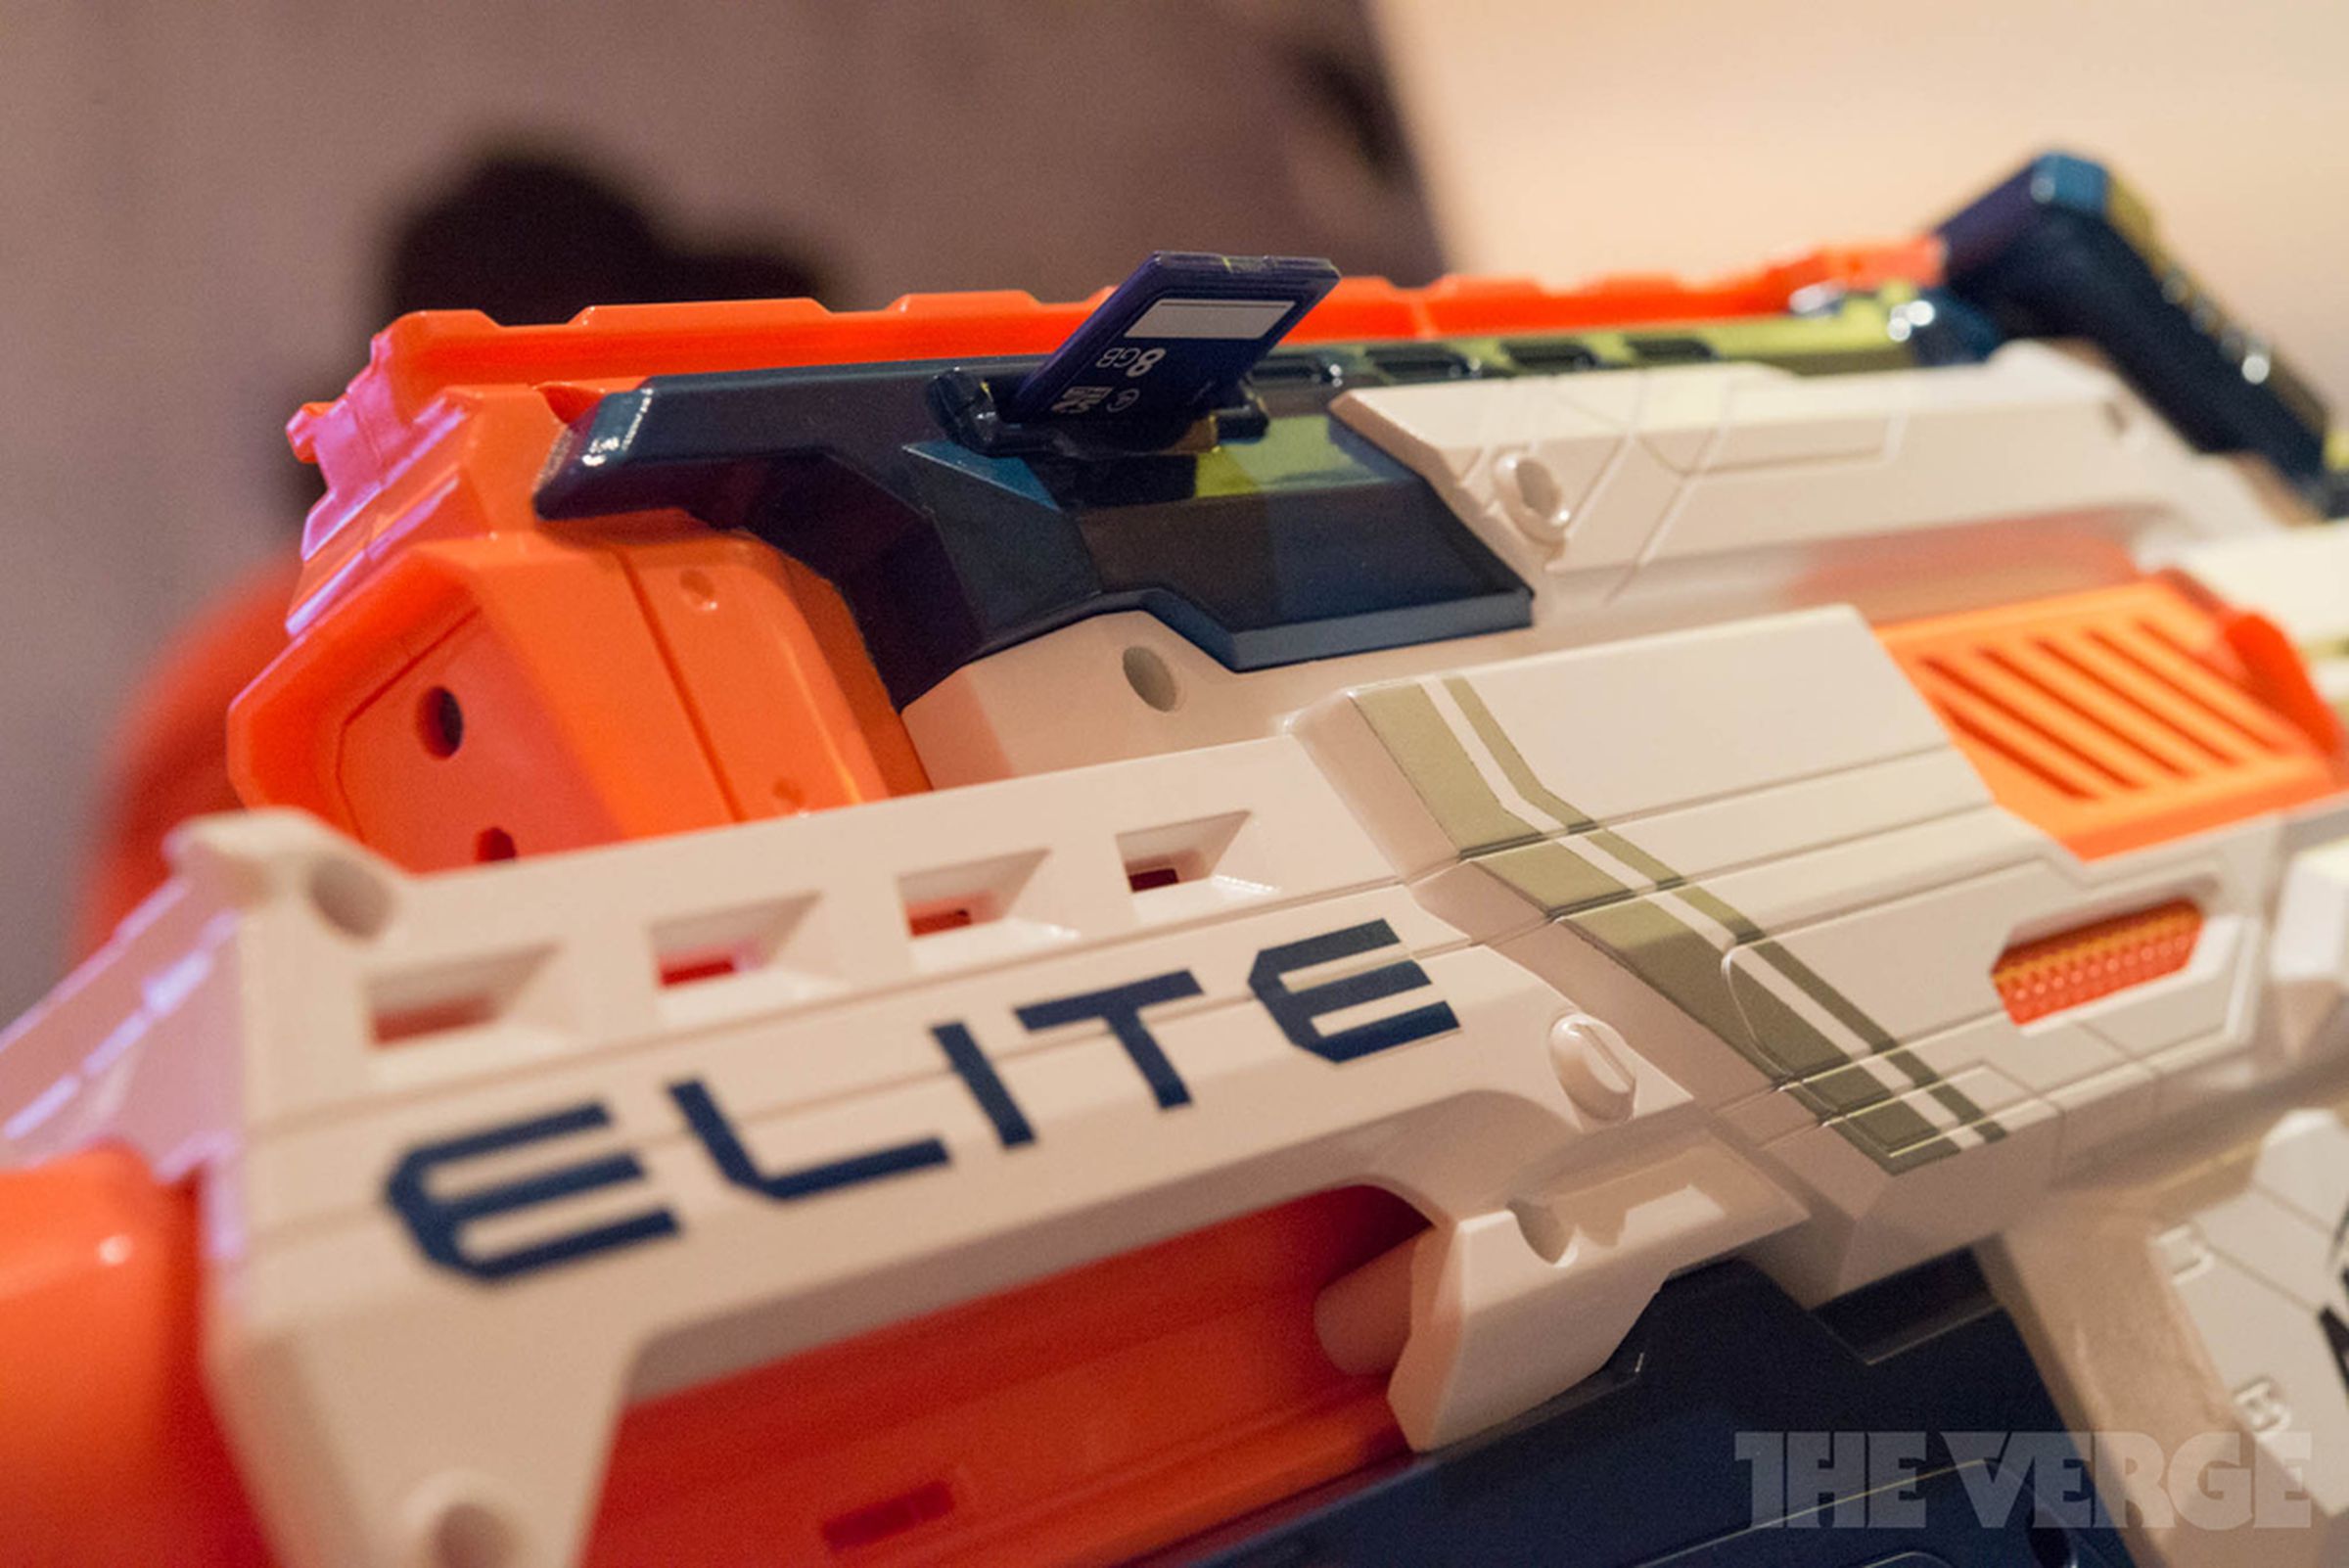 Nerf N-Strike Elite Cam ECS-12 Blaster hands-on pictures